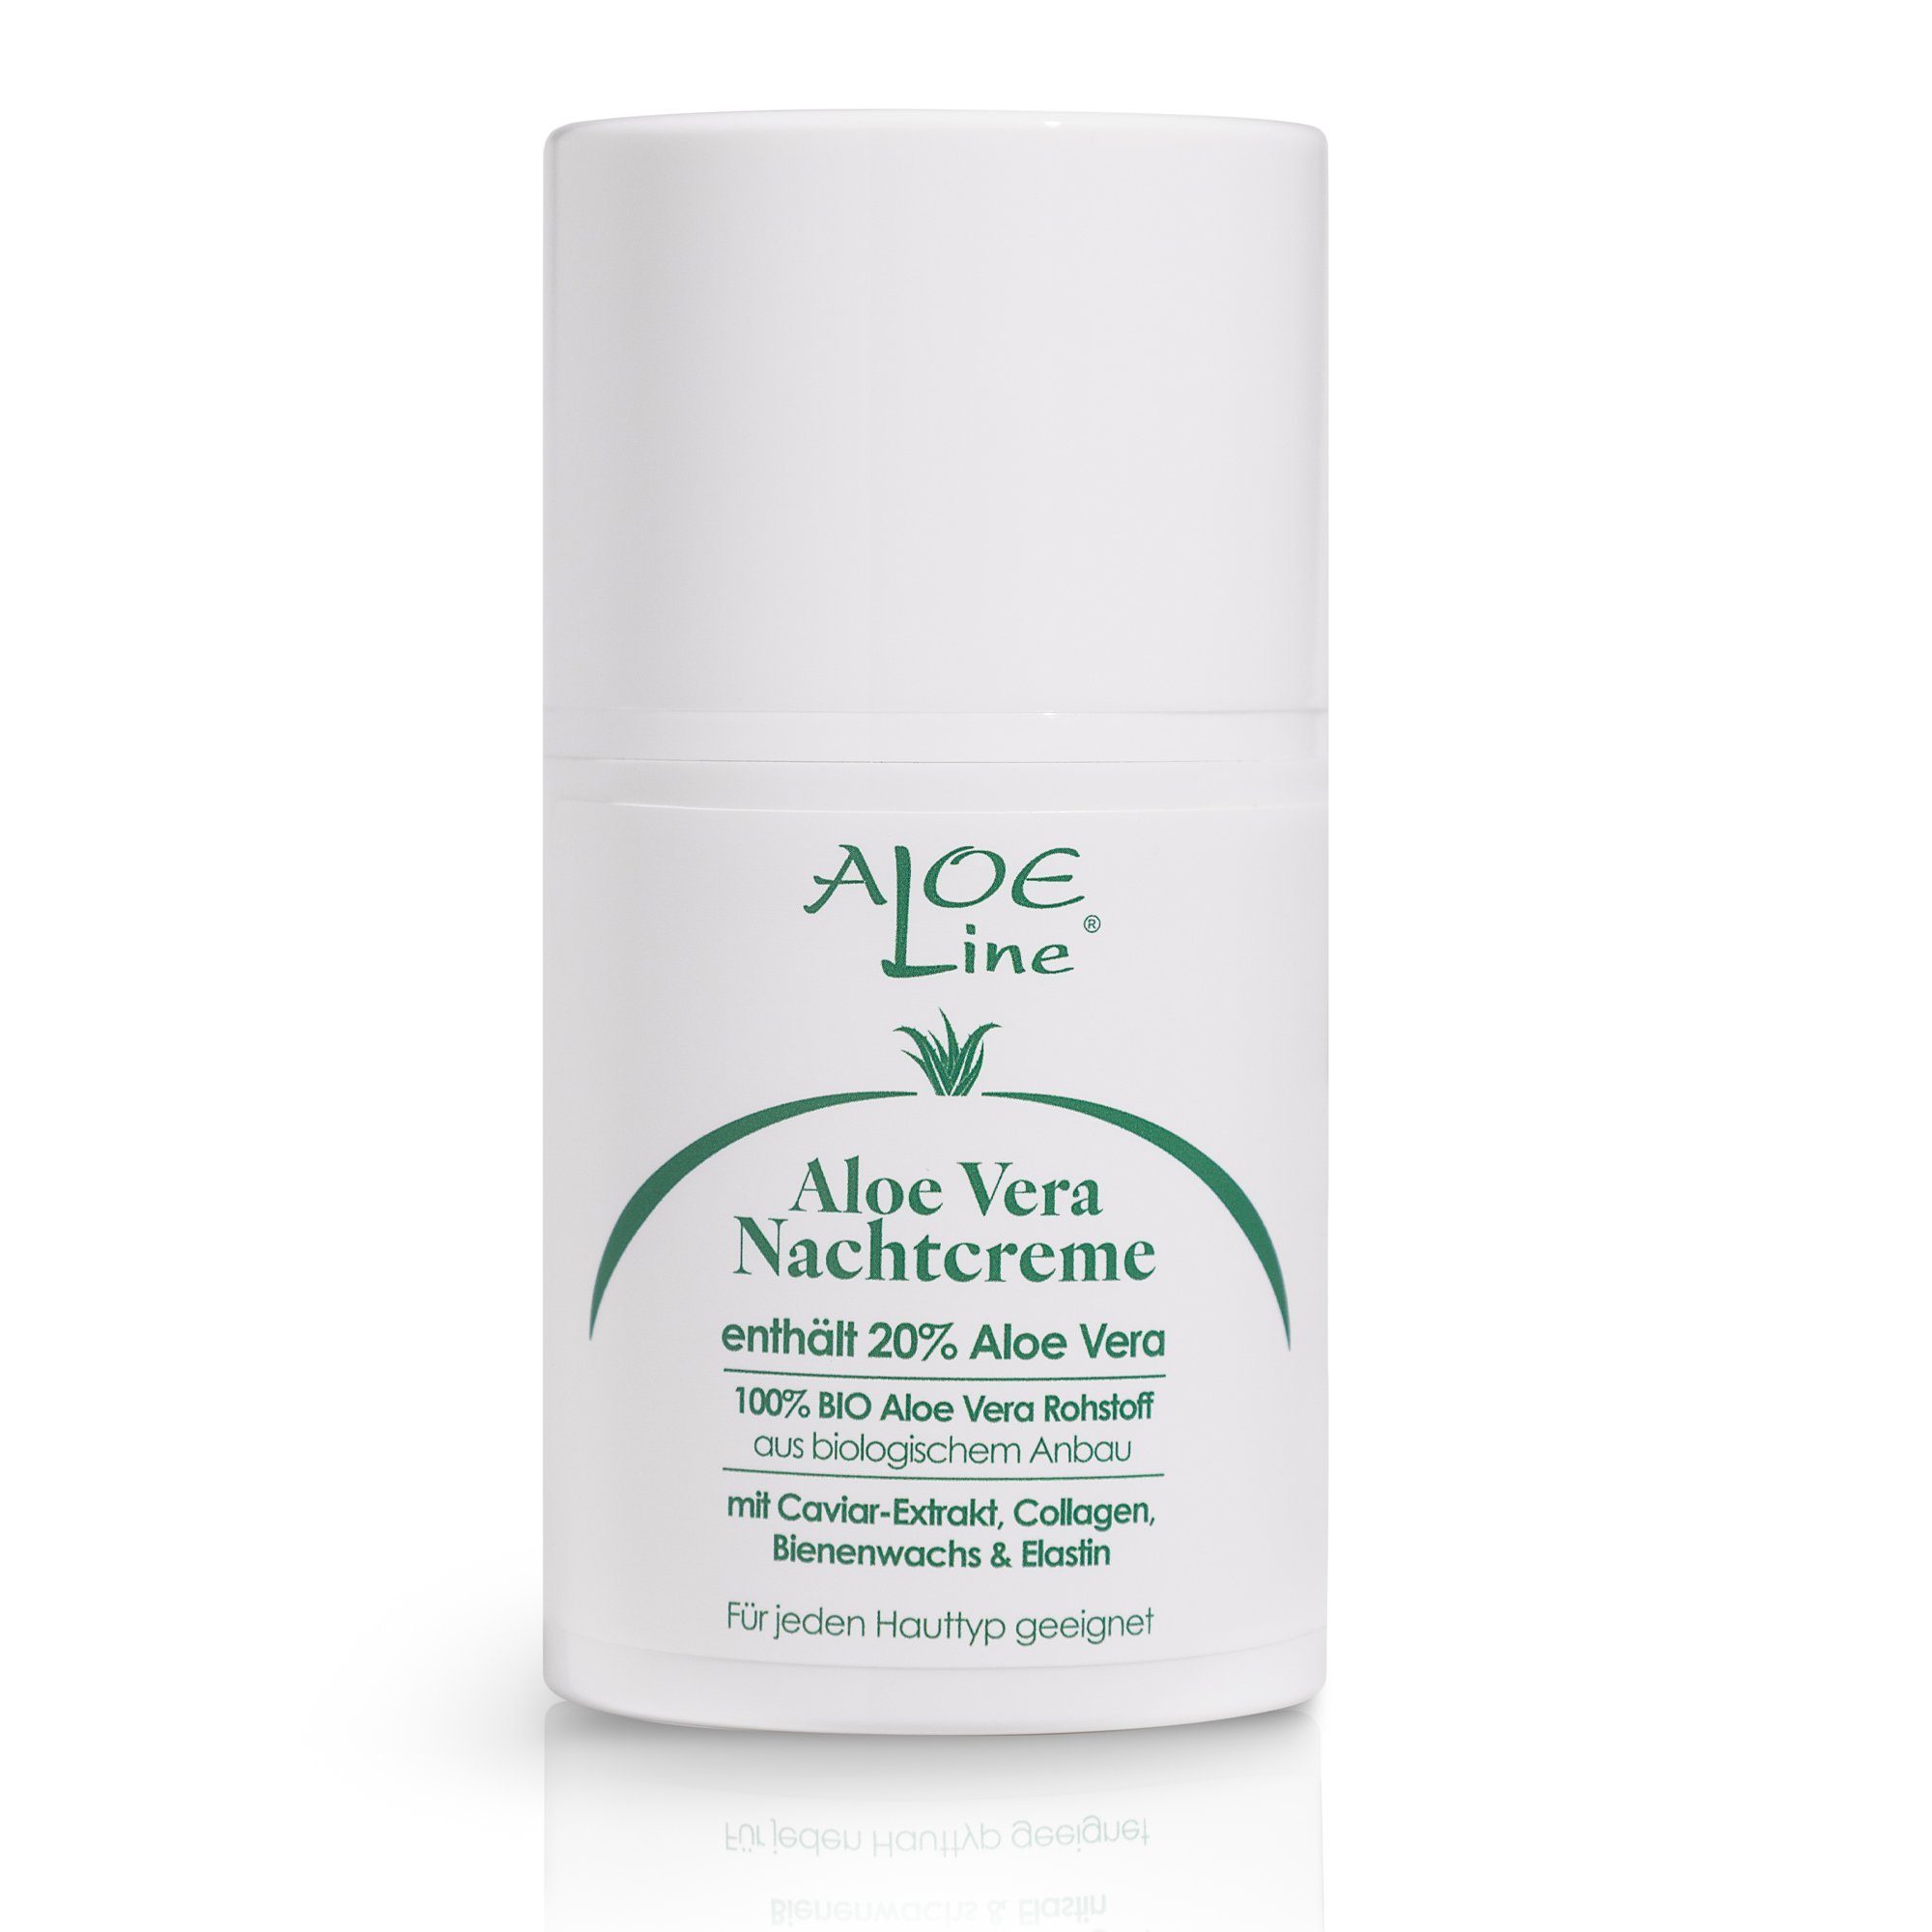 Vera & Aloe Dispenser Airless Nachtcreme 20% ALOE Caviar-Extrakt, 50ml mit Nachtcreme Bio Aloe Line Vera